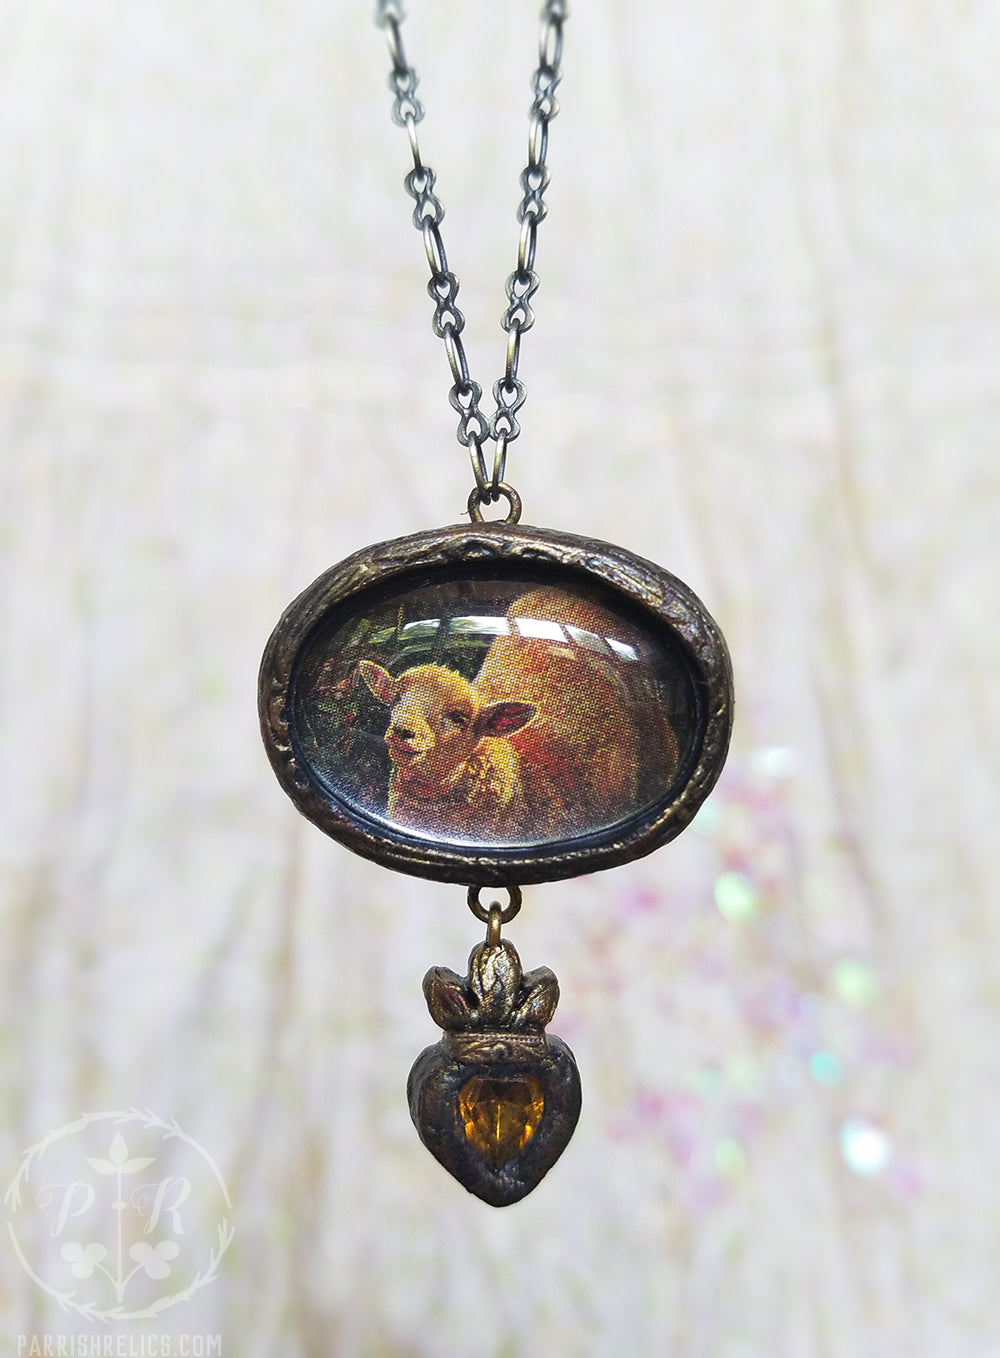 The Golden Lamb ~ Sacred Heart Pictorial Shrine Amulet